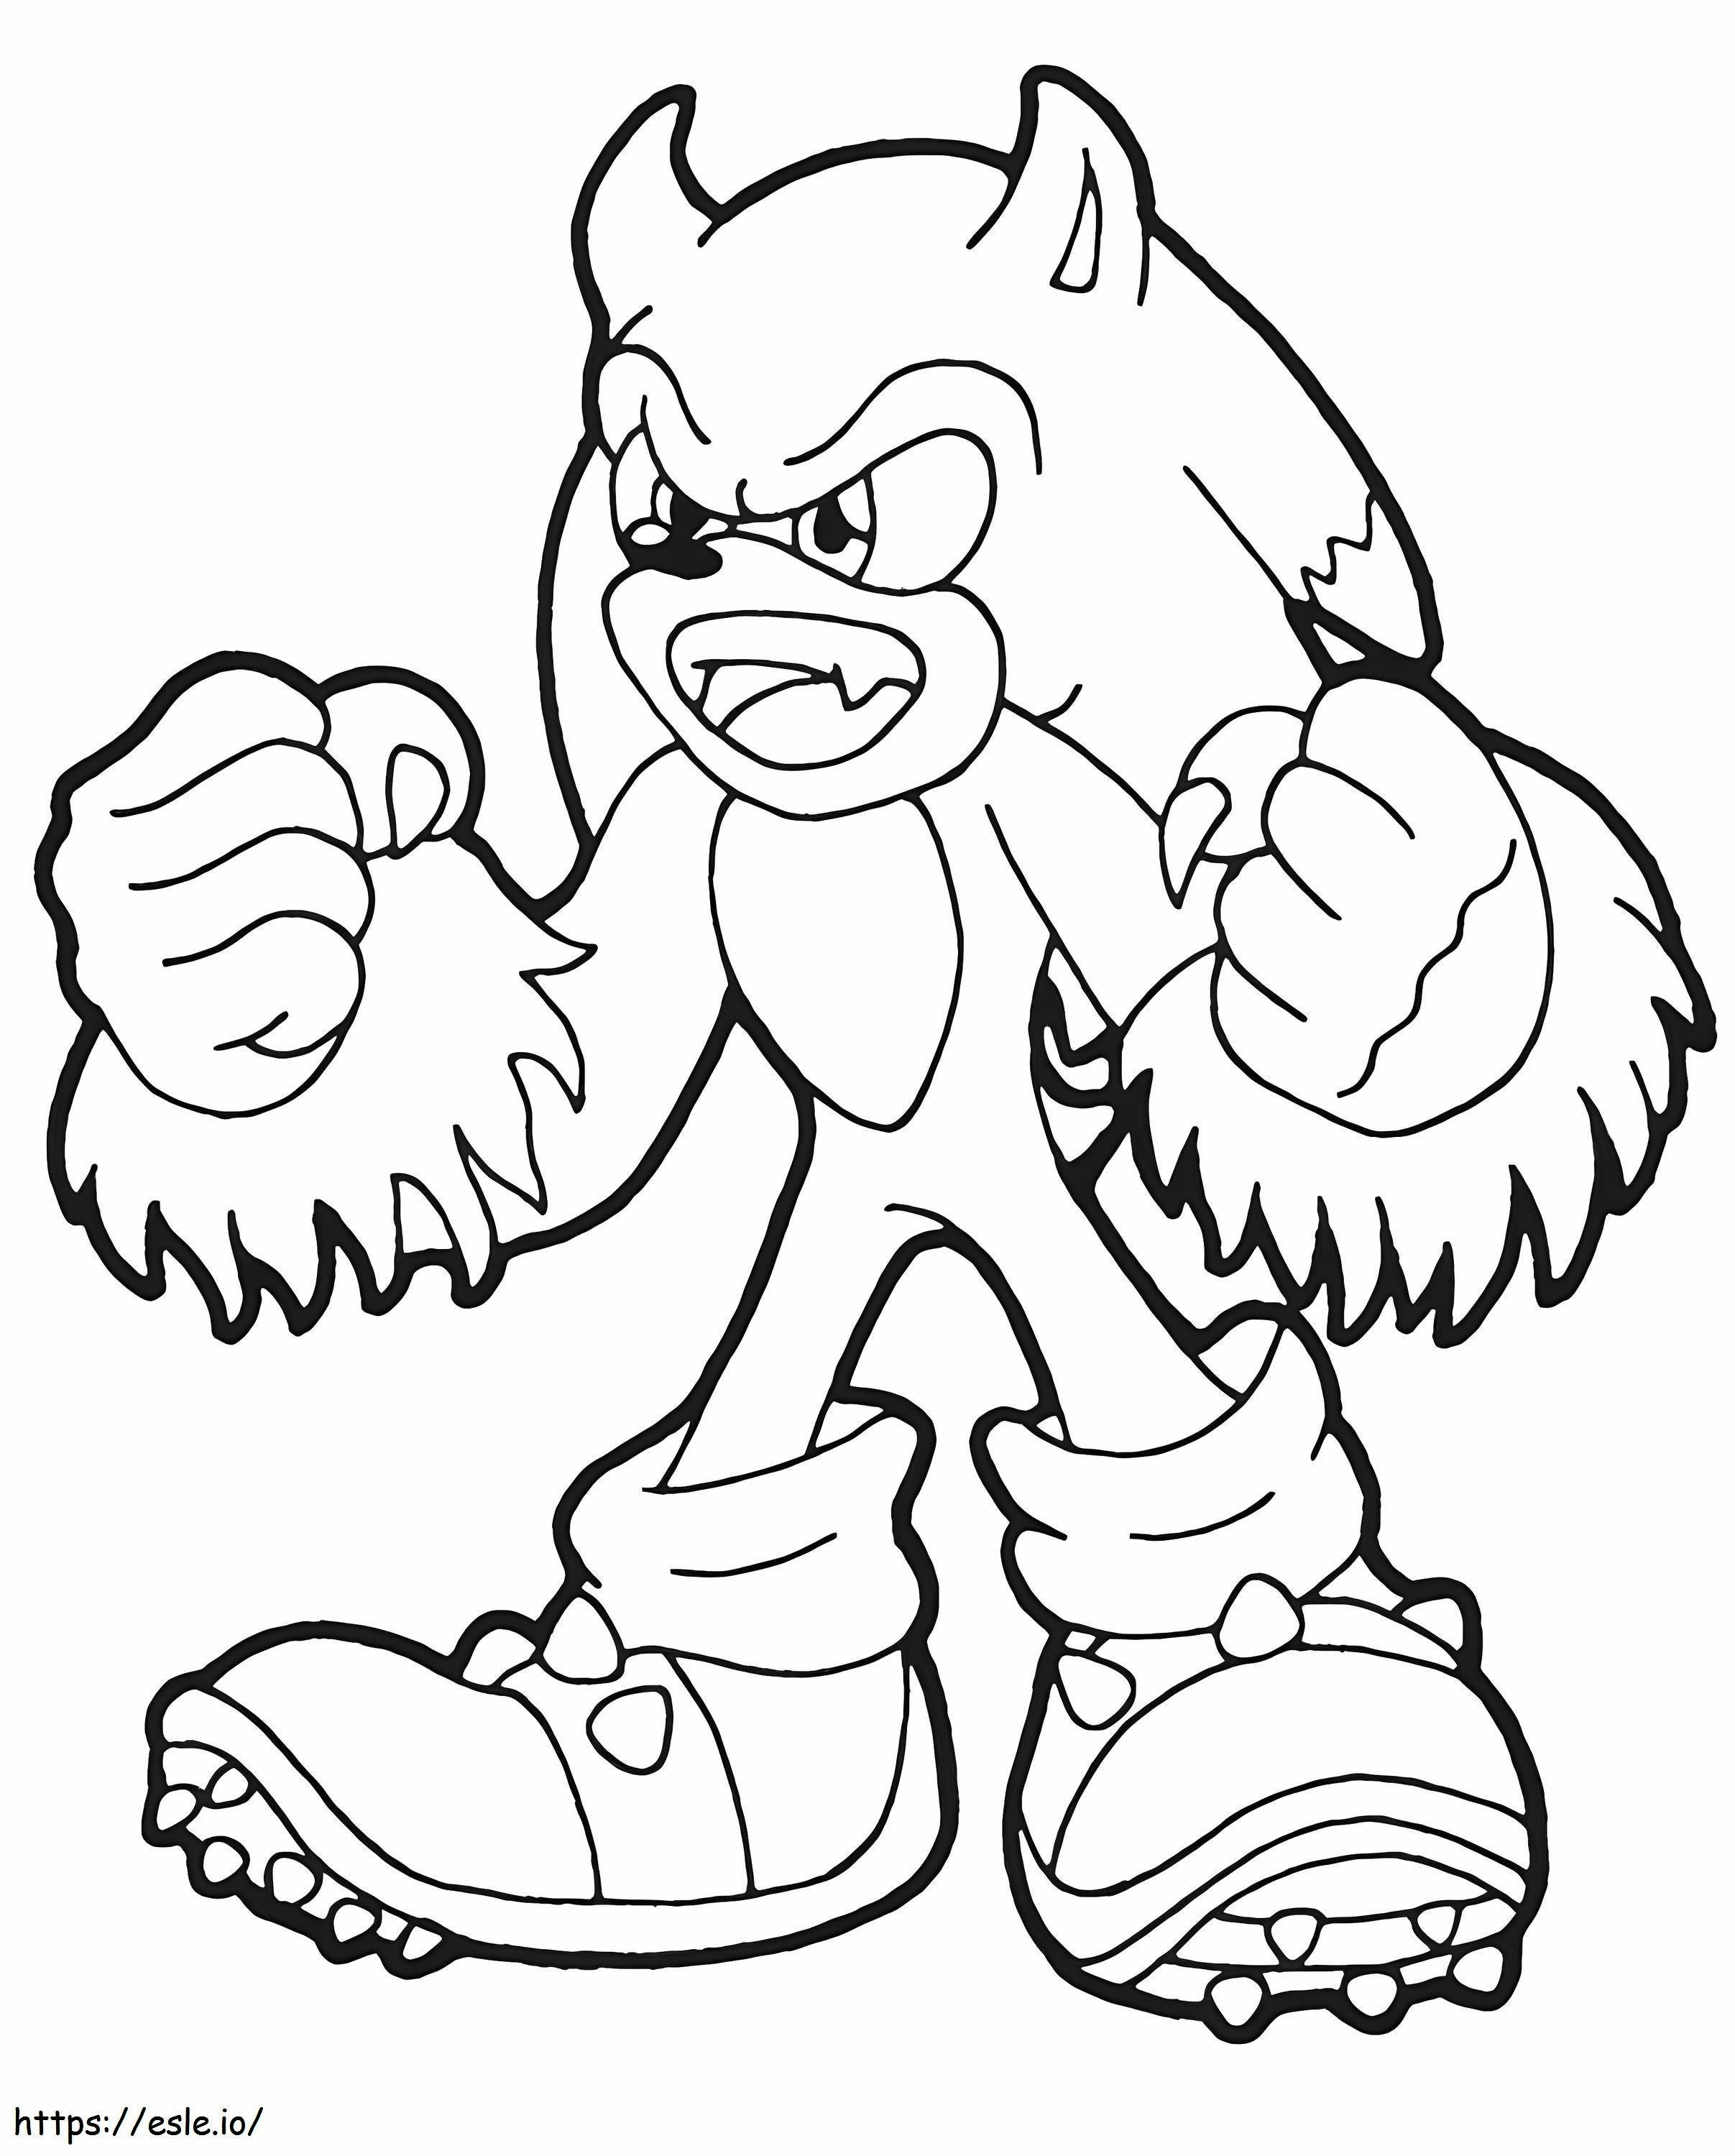 Sonic Werehog coloring page